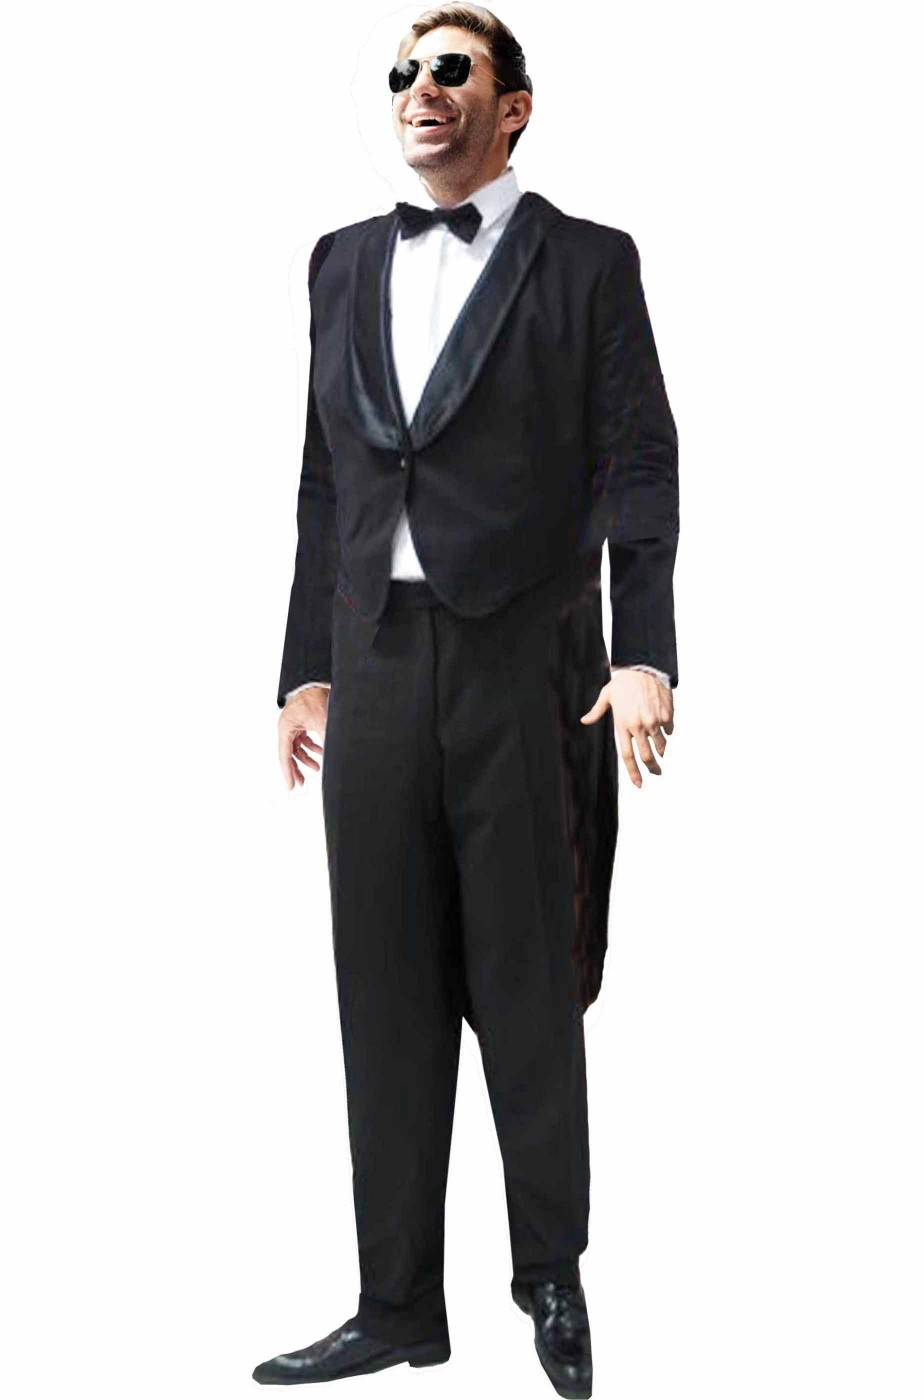 Giacca nera lunga marsina uomo anni 20 Charlie Chaplin Charlot o Penguin